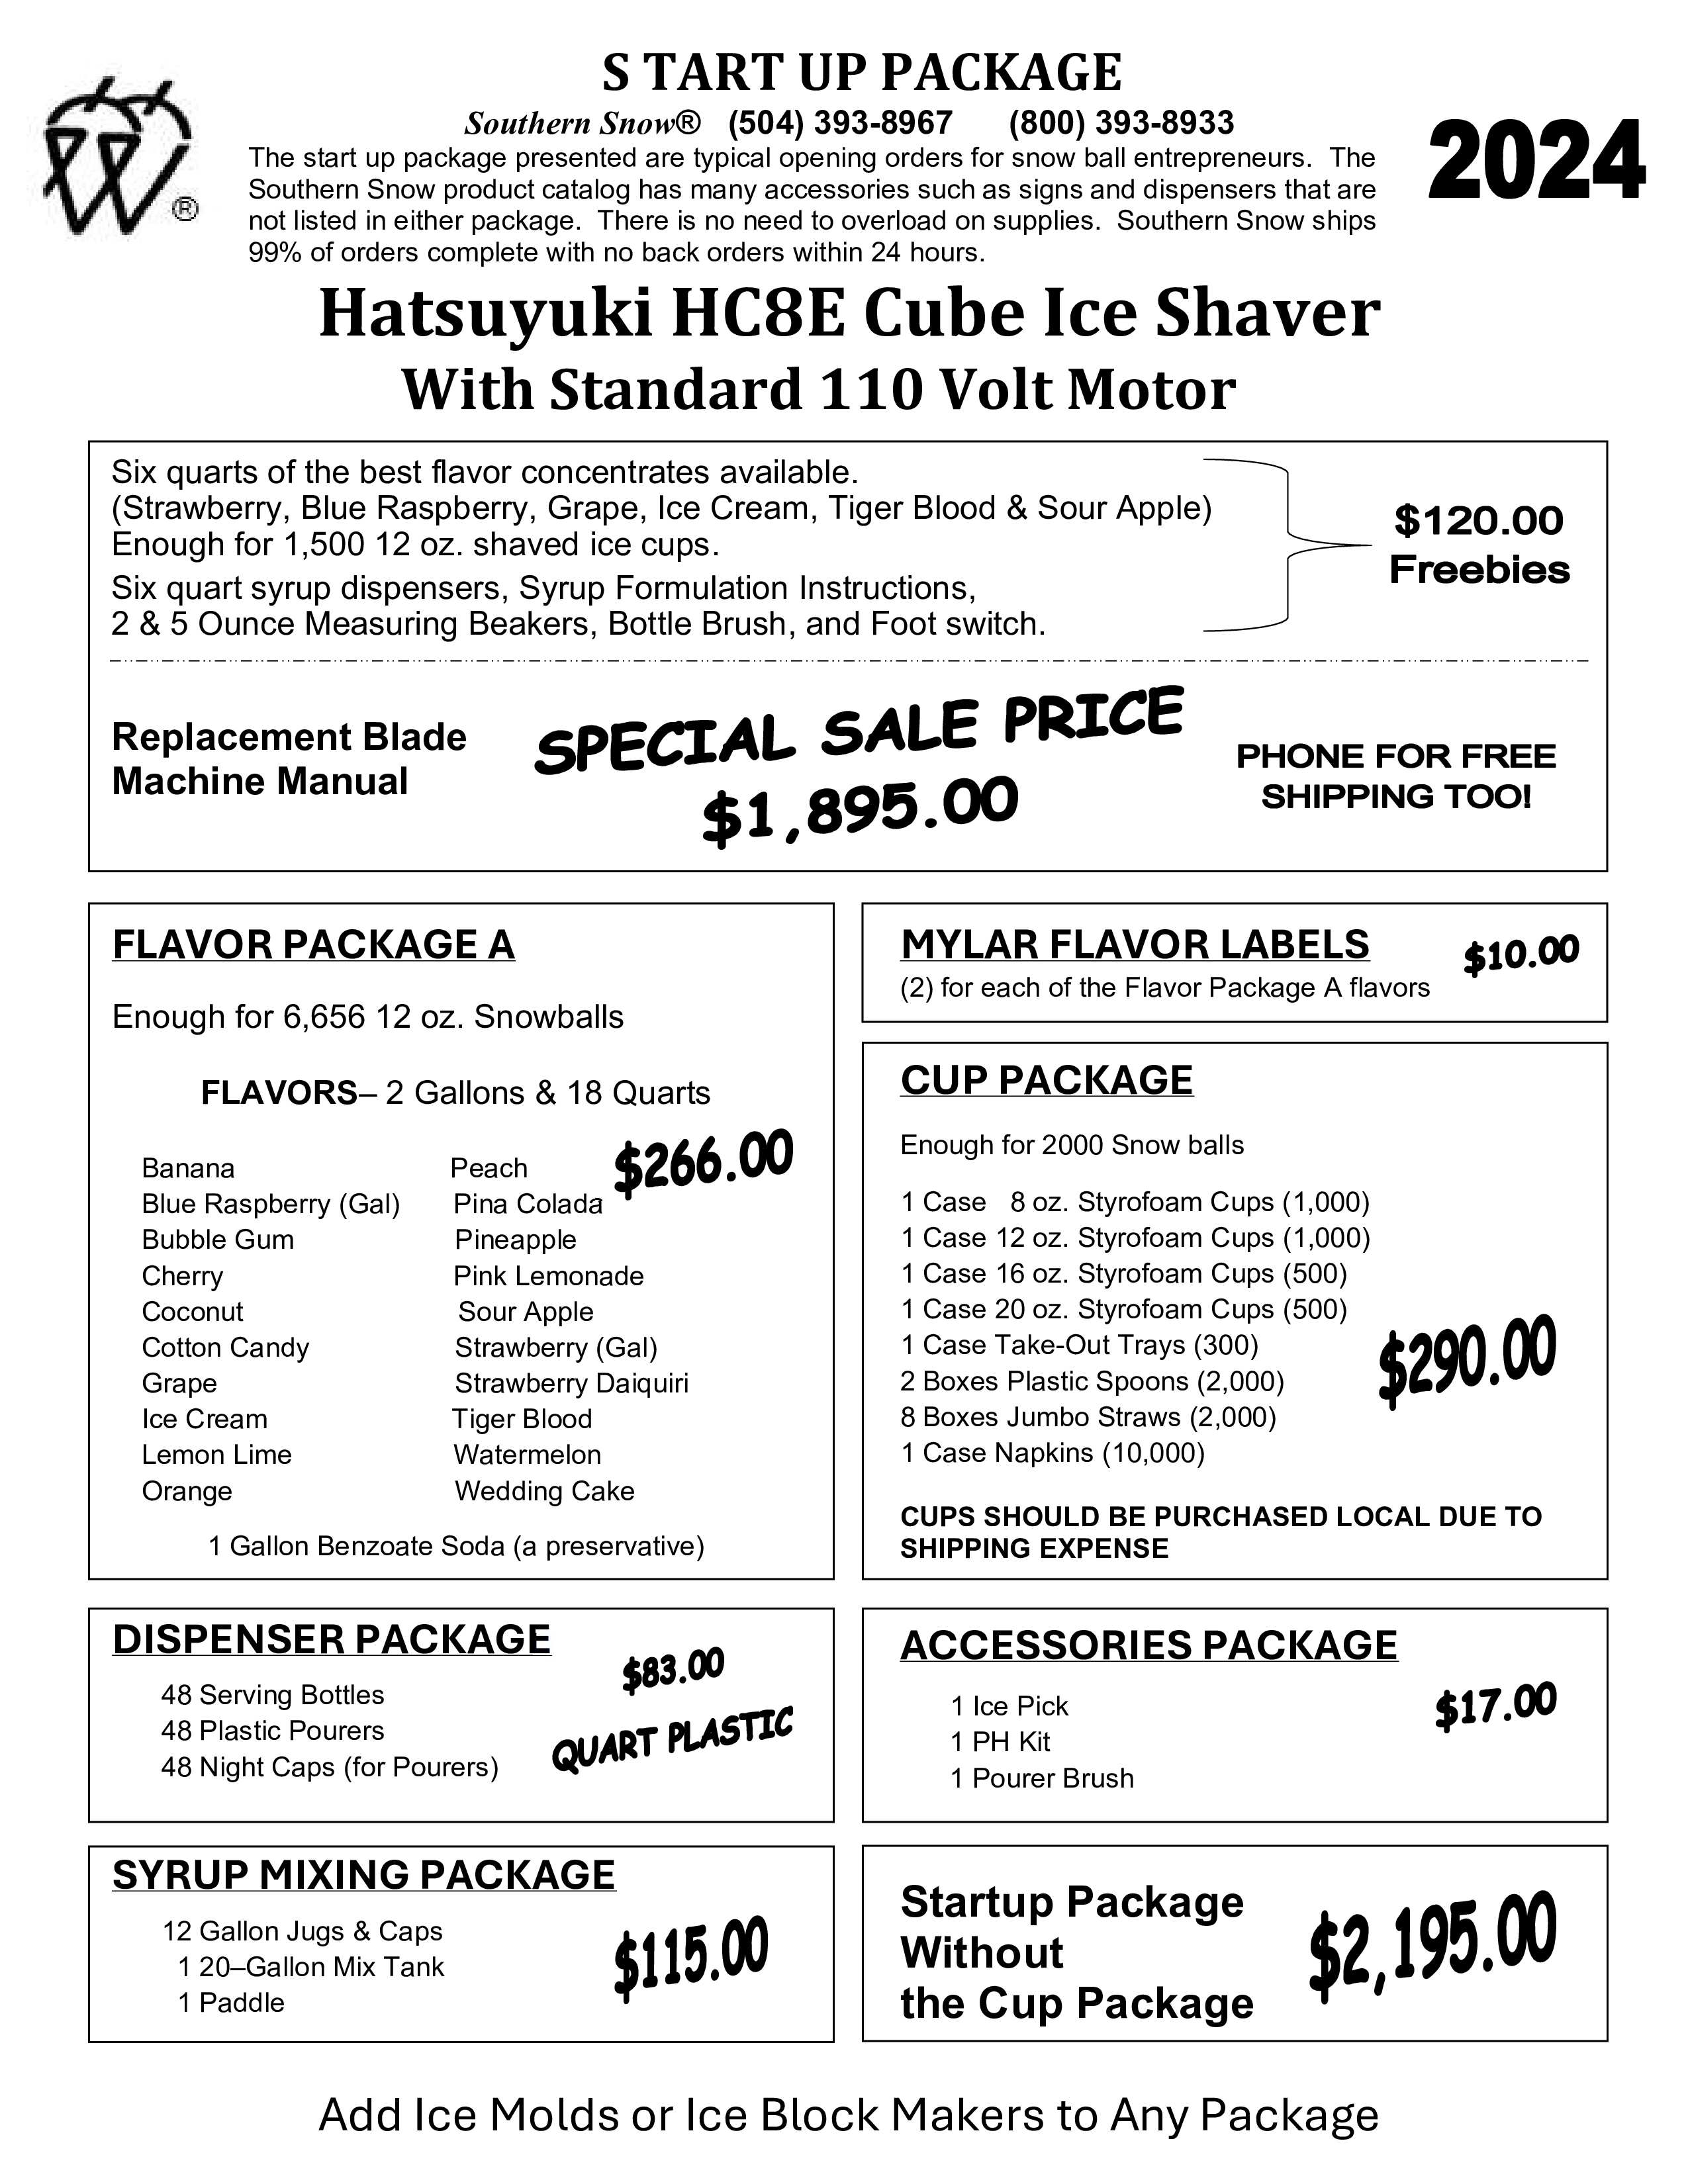 Hatsuyuki HC8E Cube Ice Shaver Start Up